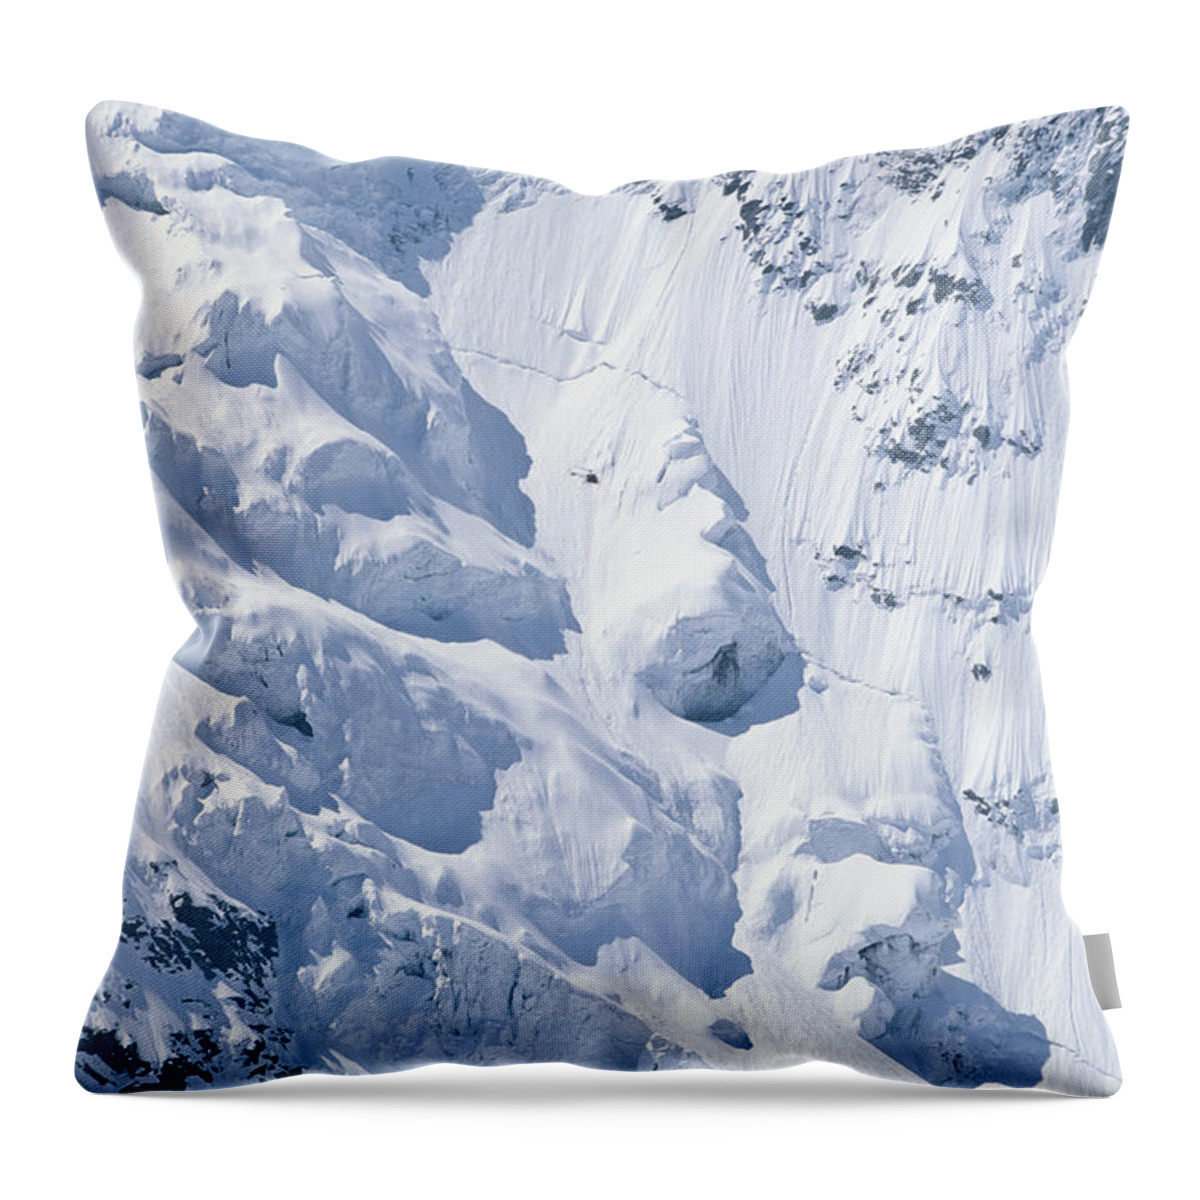 Snow Throw Pillow featuring the photograph Alpine Glacier, Switzerland by Franz Aberham